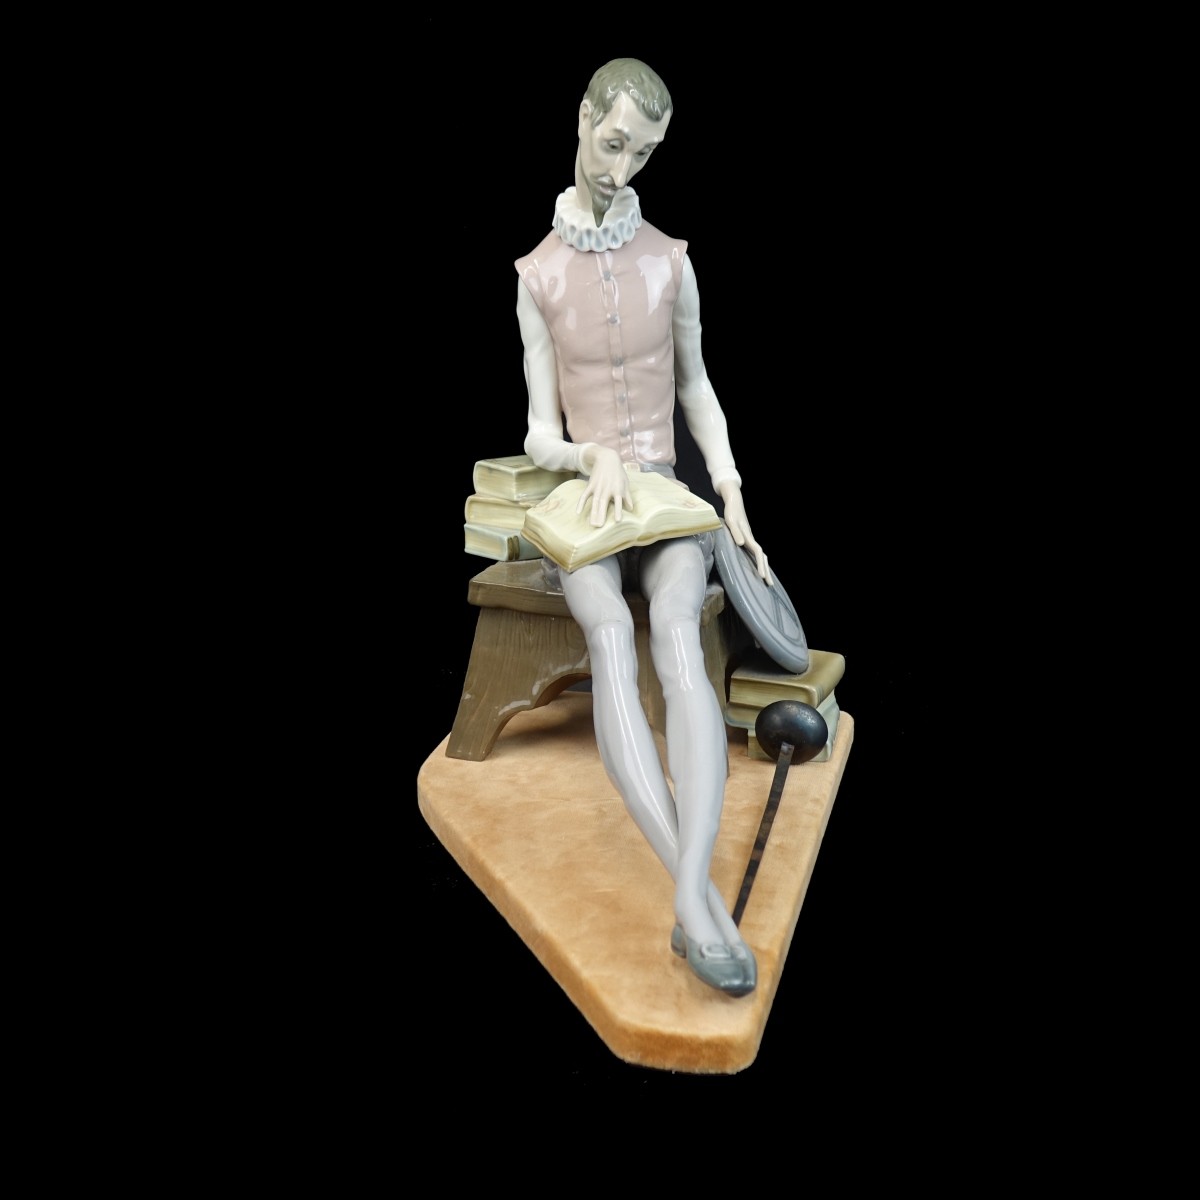 Zephir by Lladro "Don Quixote" Porcelain Figurine